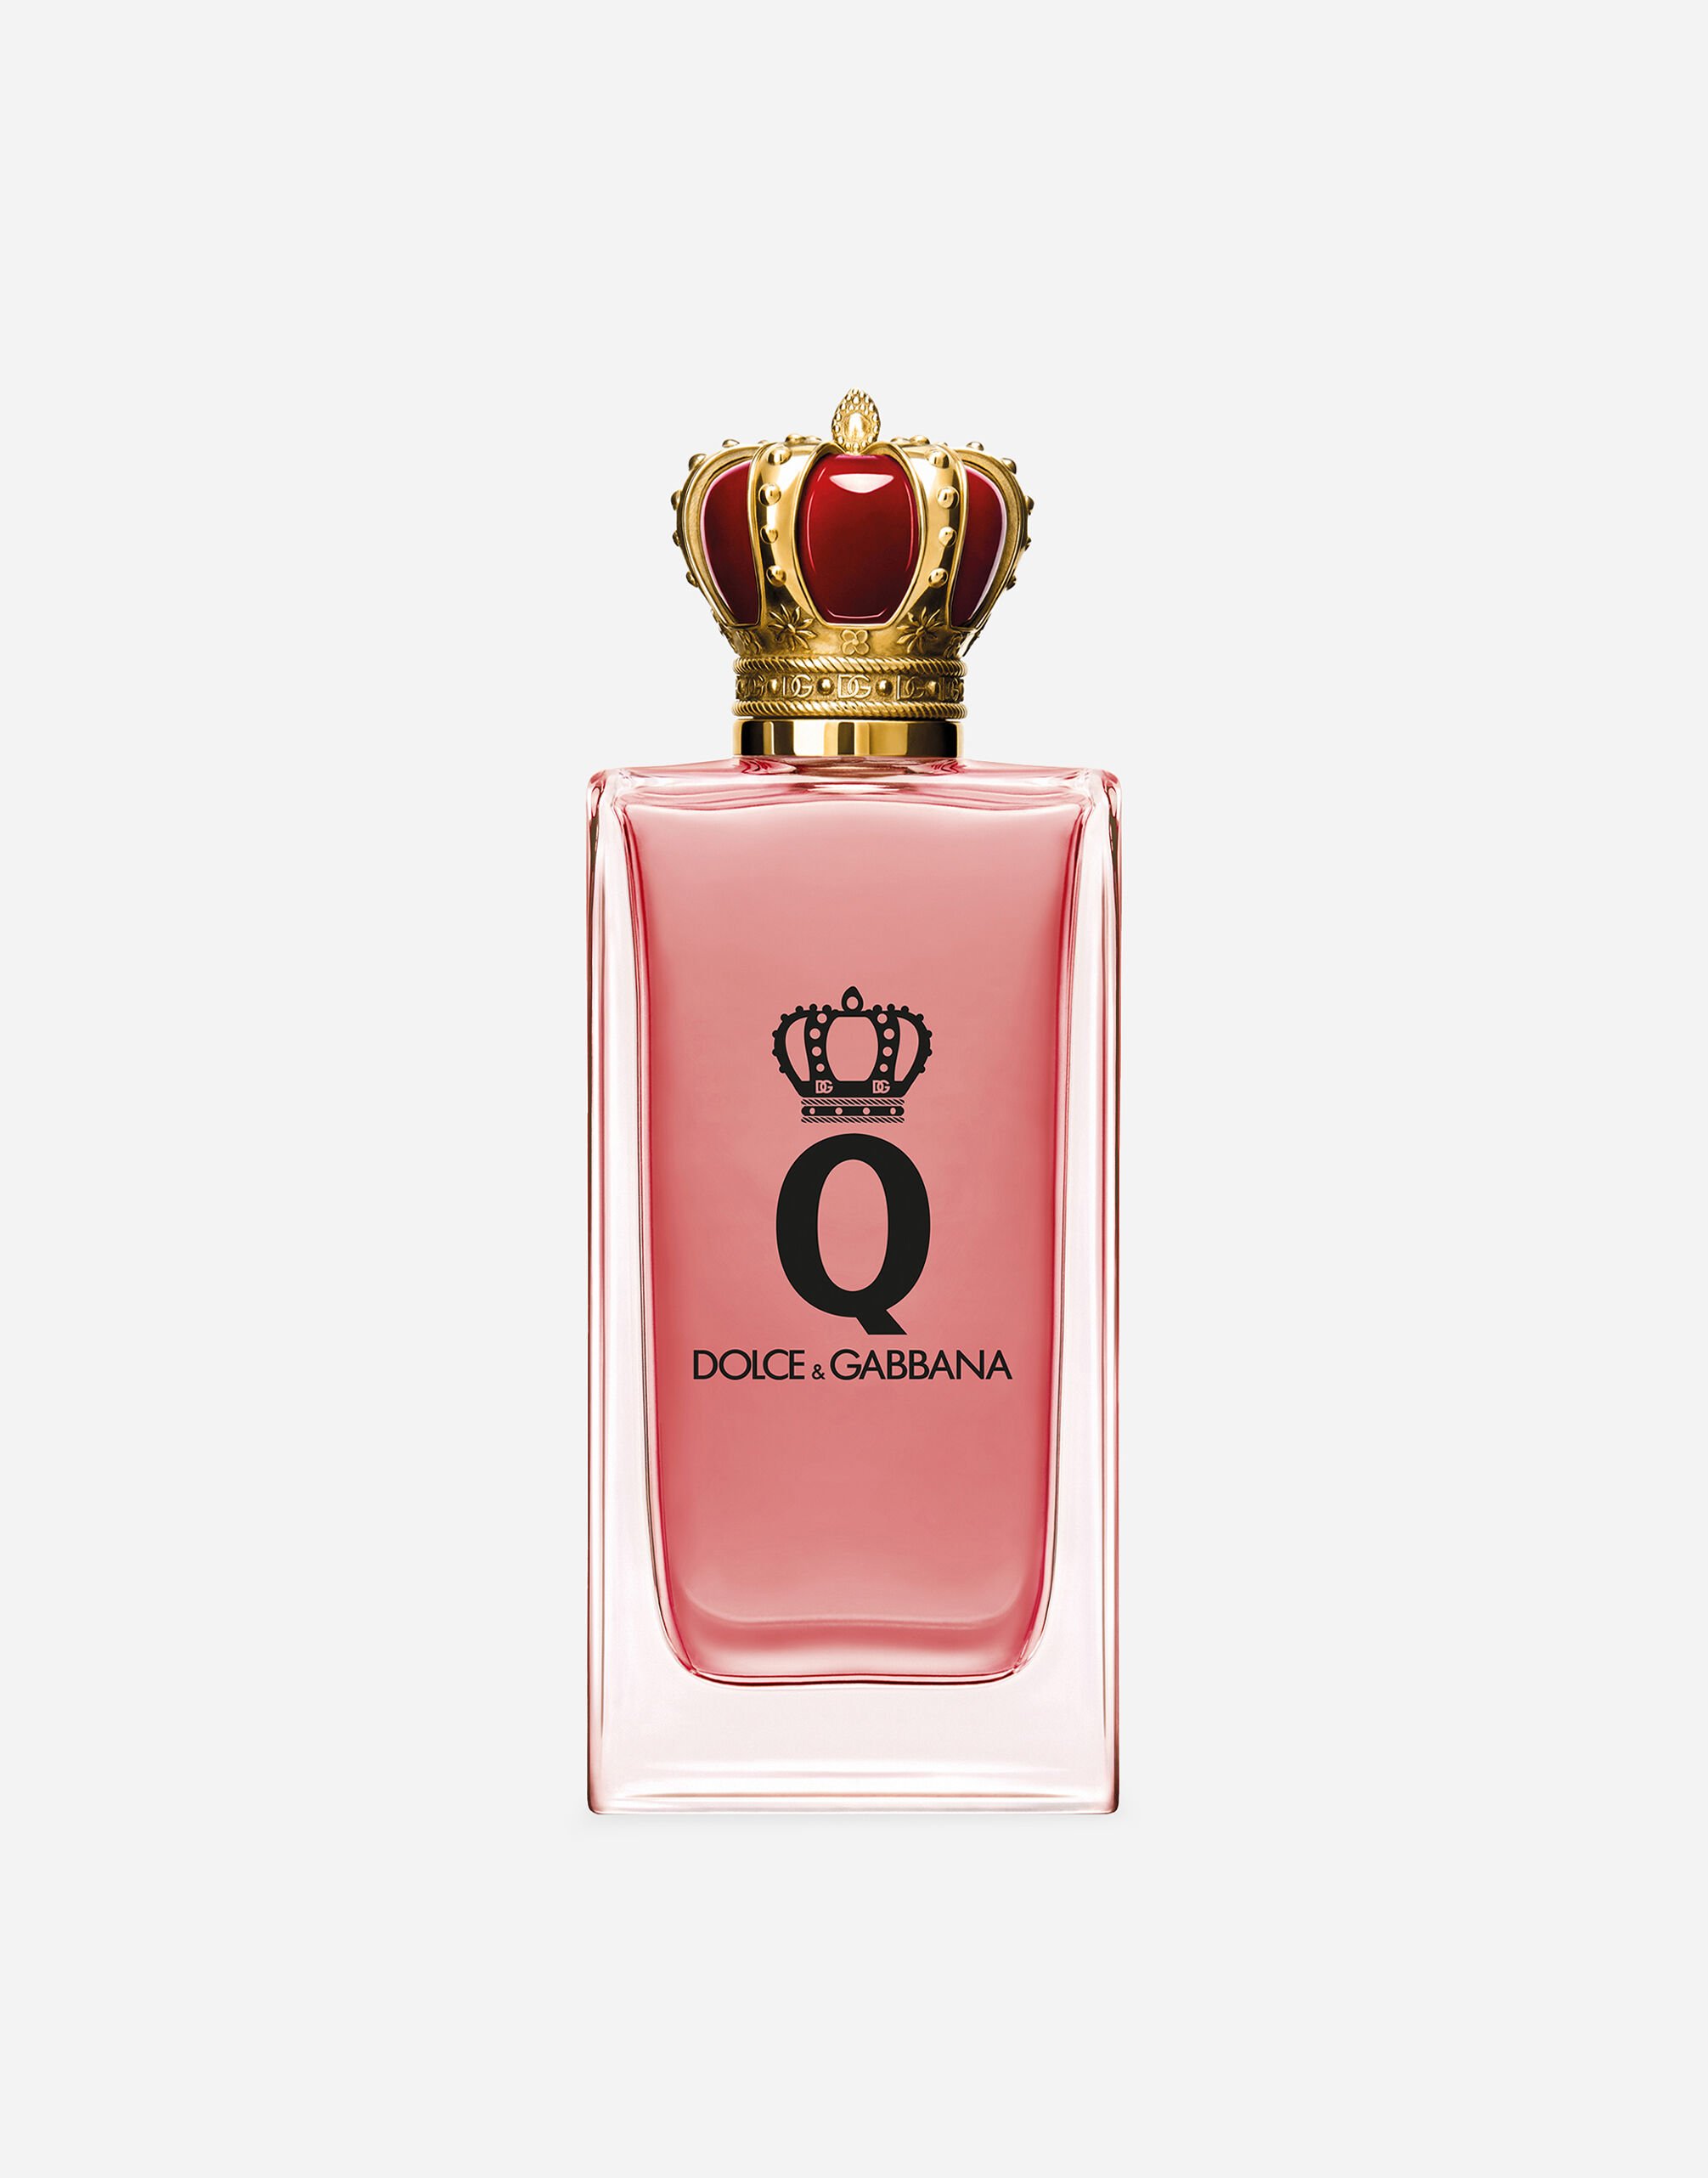 Dolce & Gabbana Q by Dolce&Gabbana Eau de Parfum Intense Female -